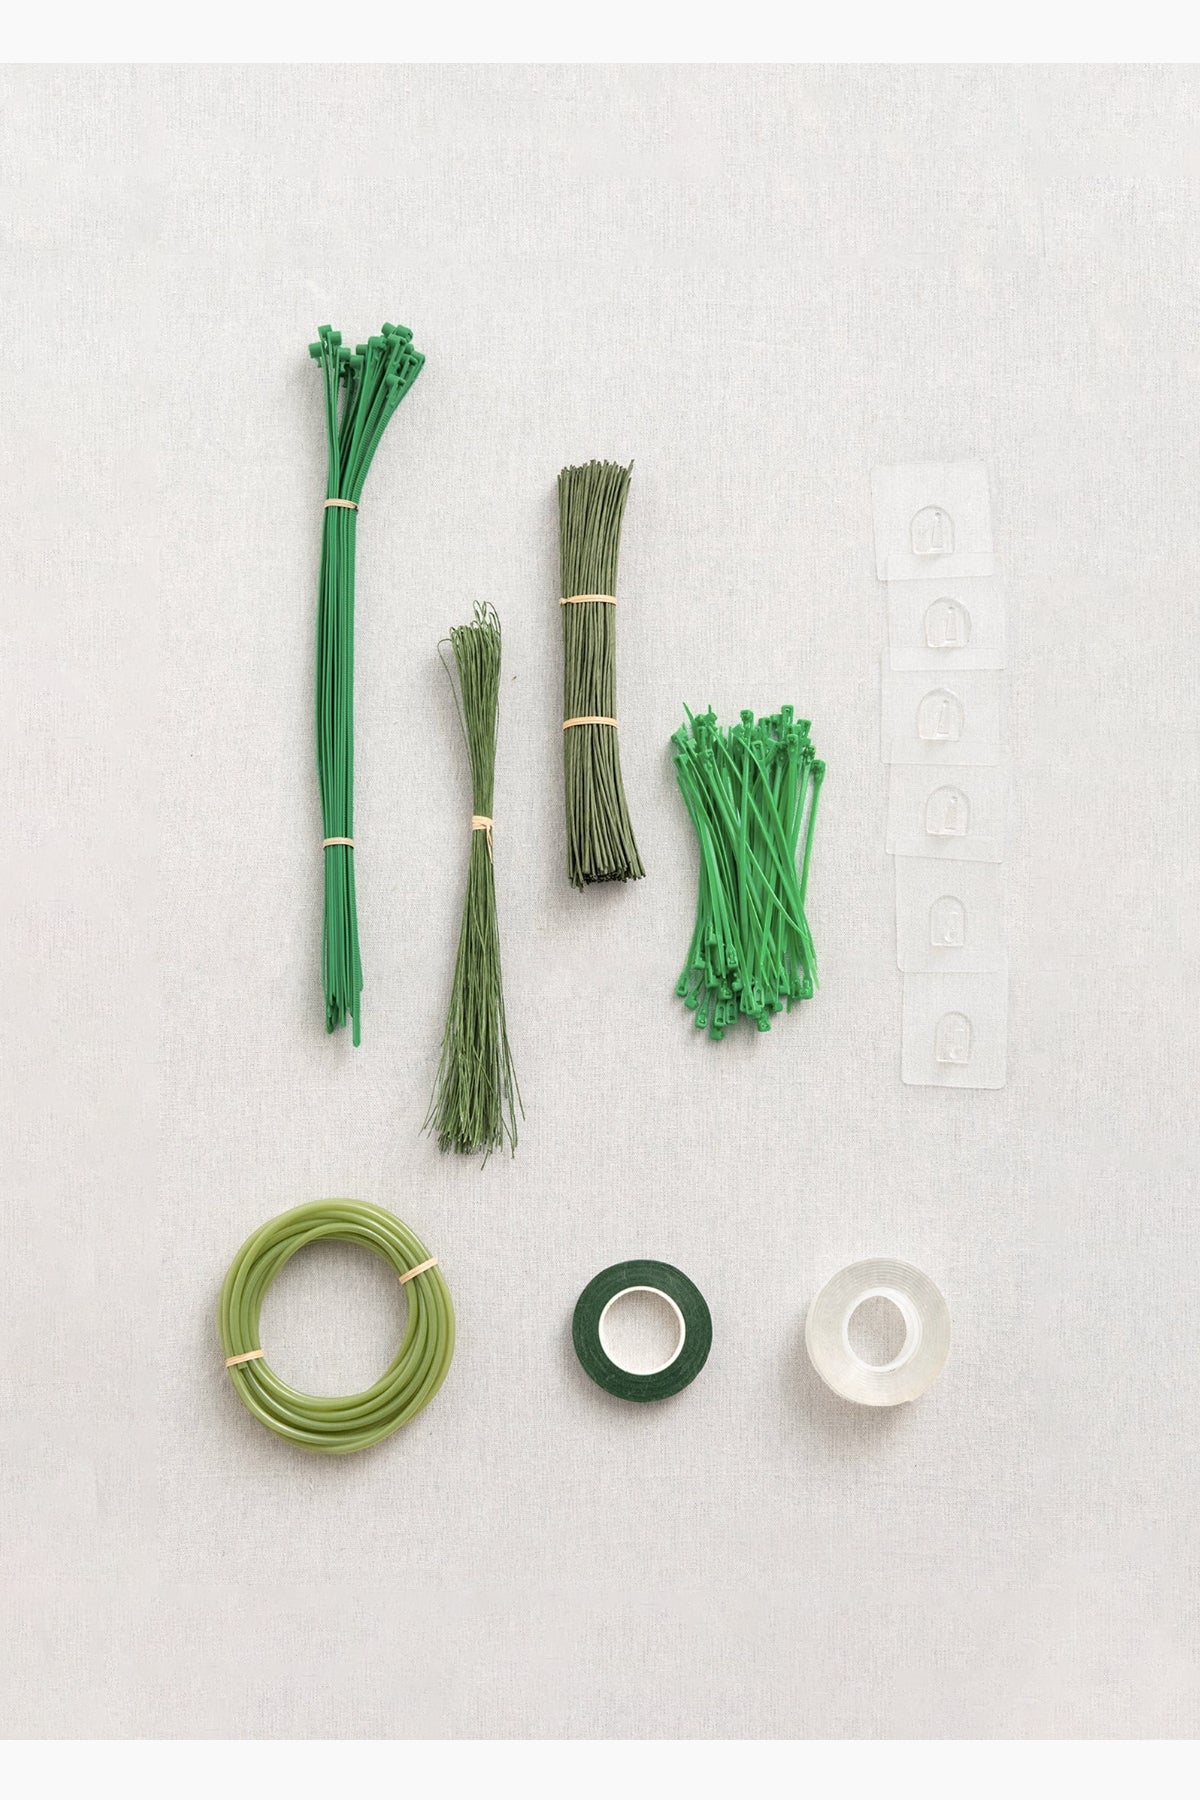 6 Packs Vintage Plastic Flower Stem Tubing Components SiroCraft 72 Green  Stems